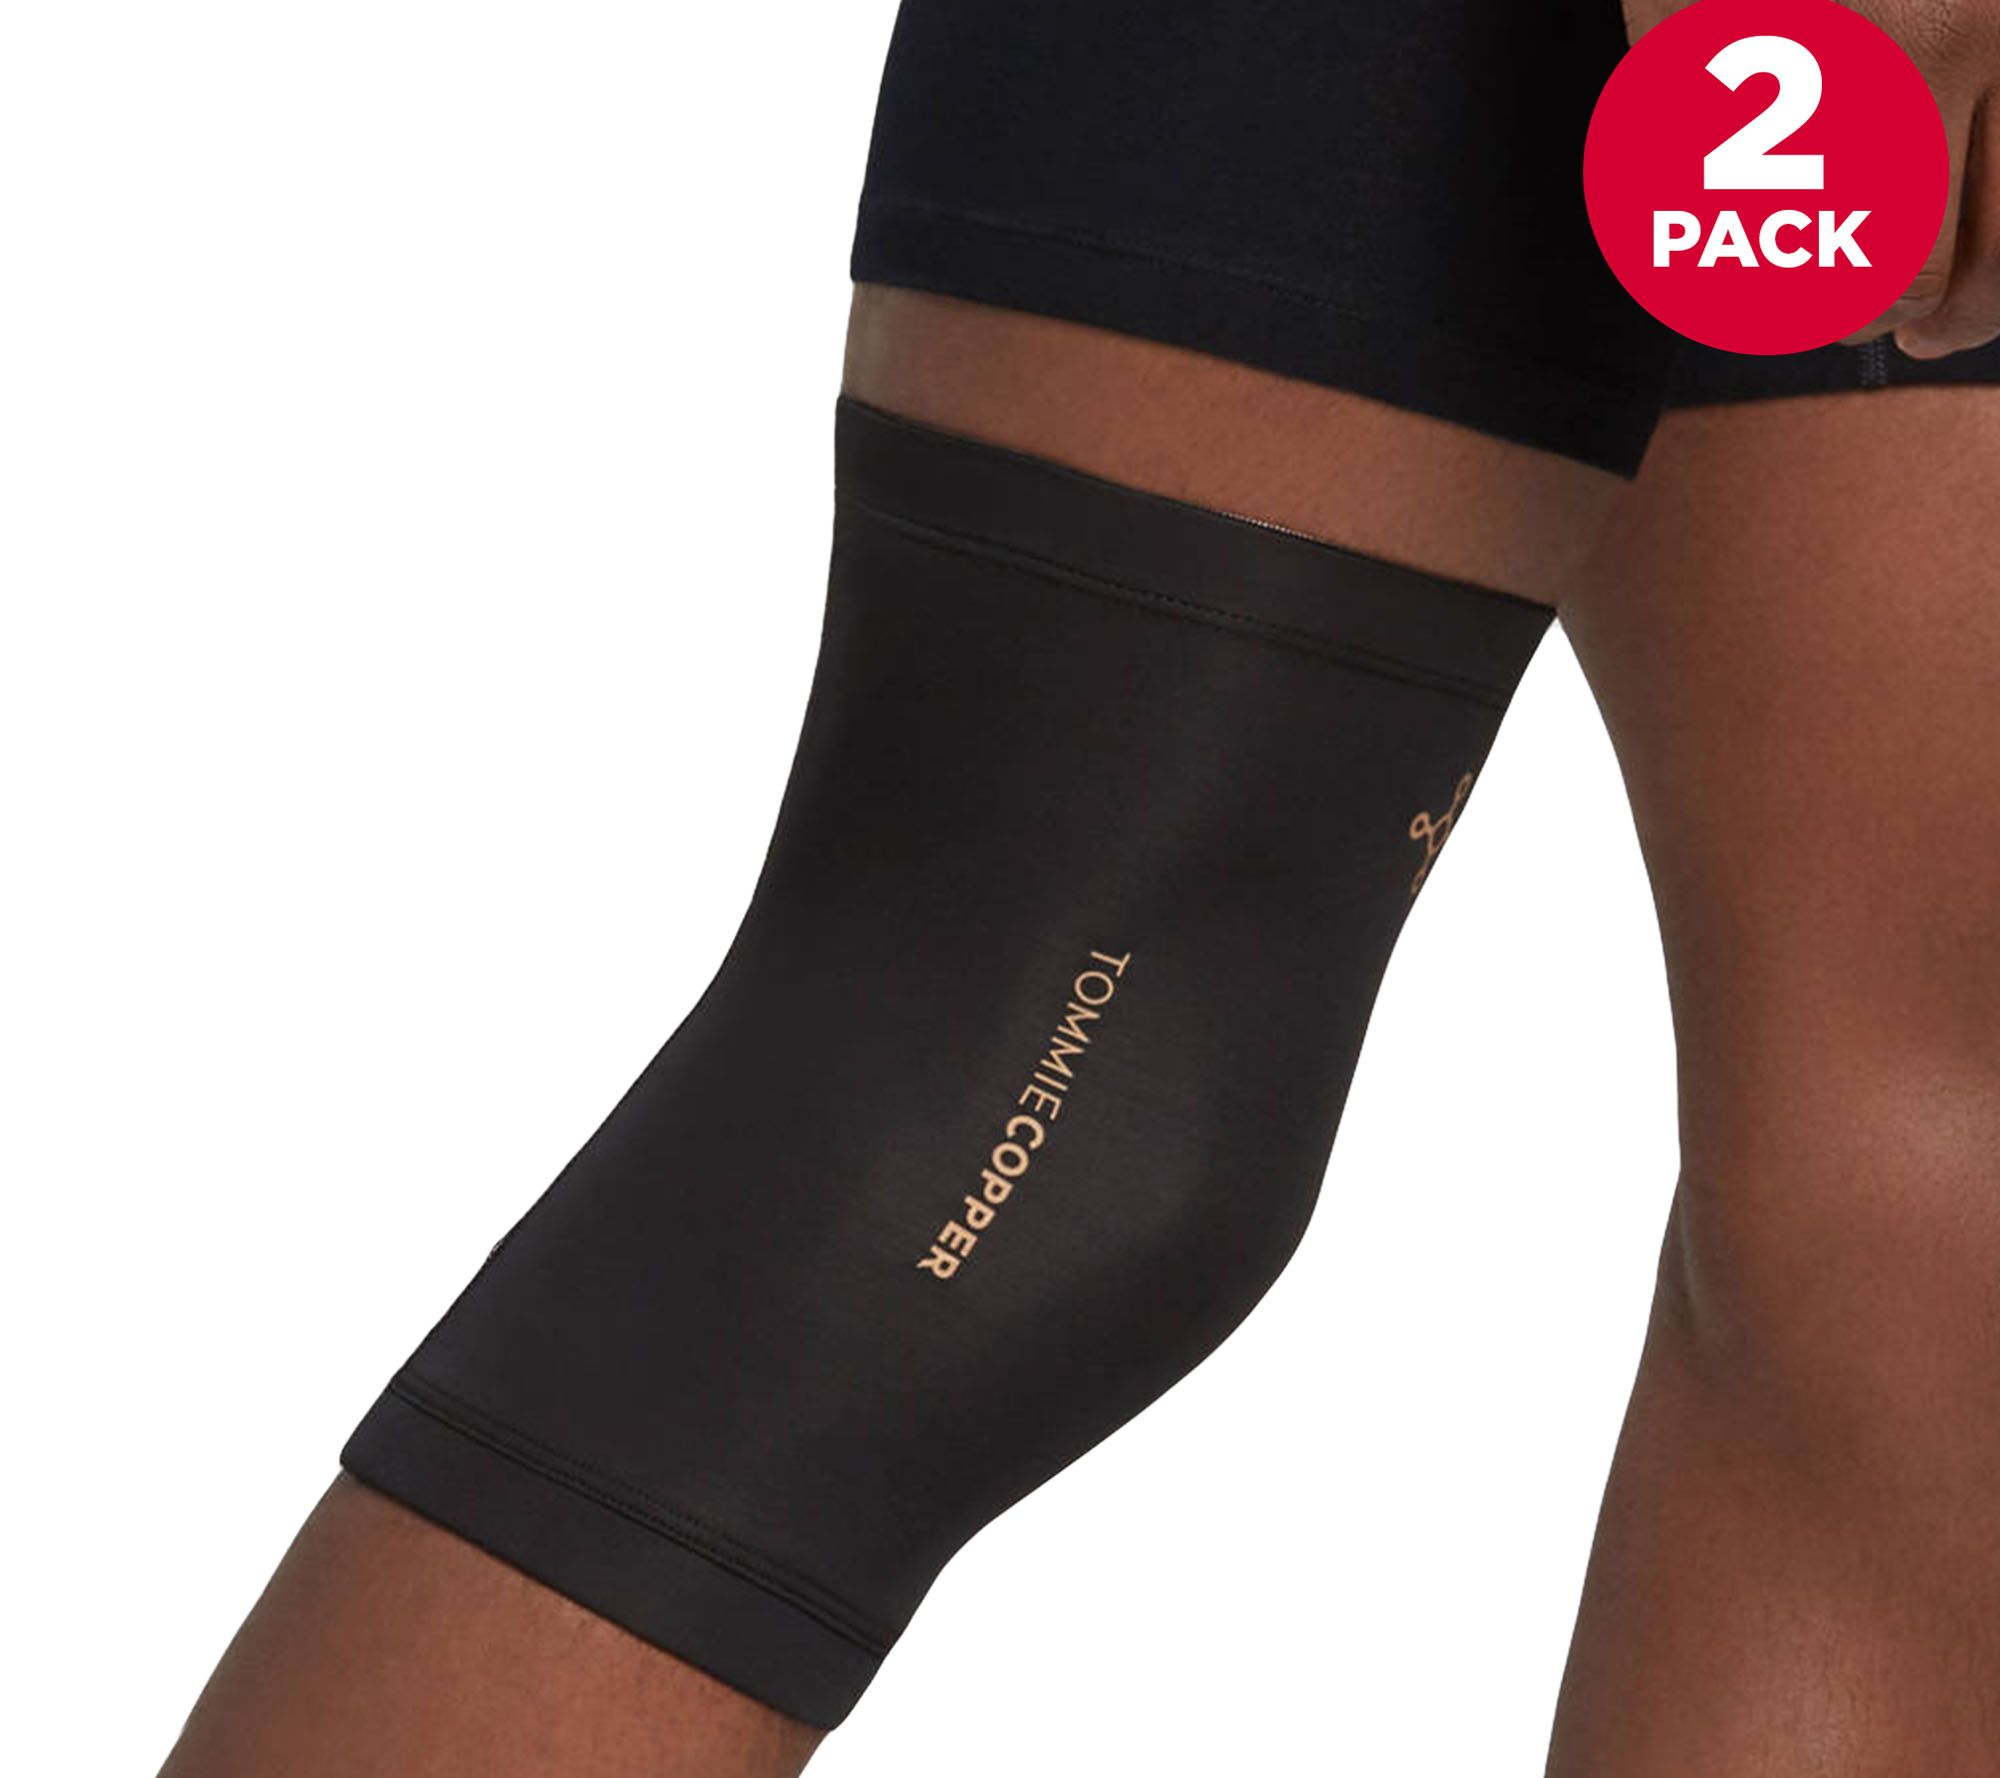 Tommie Copper Women's Core Compression Knee Sleeve FR7 Black Size L 